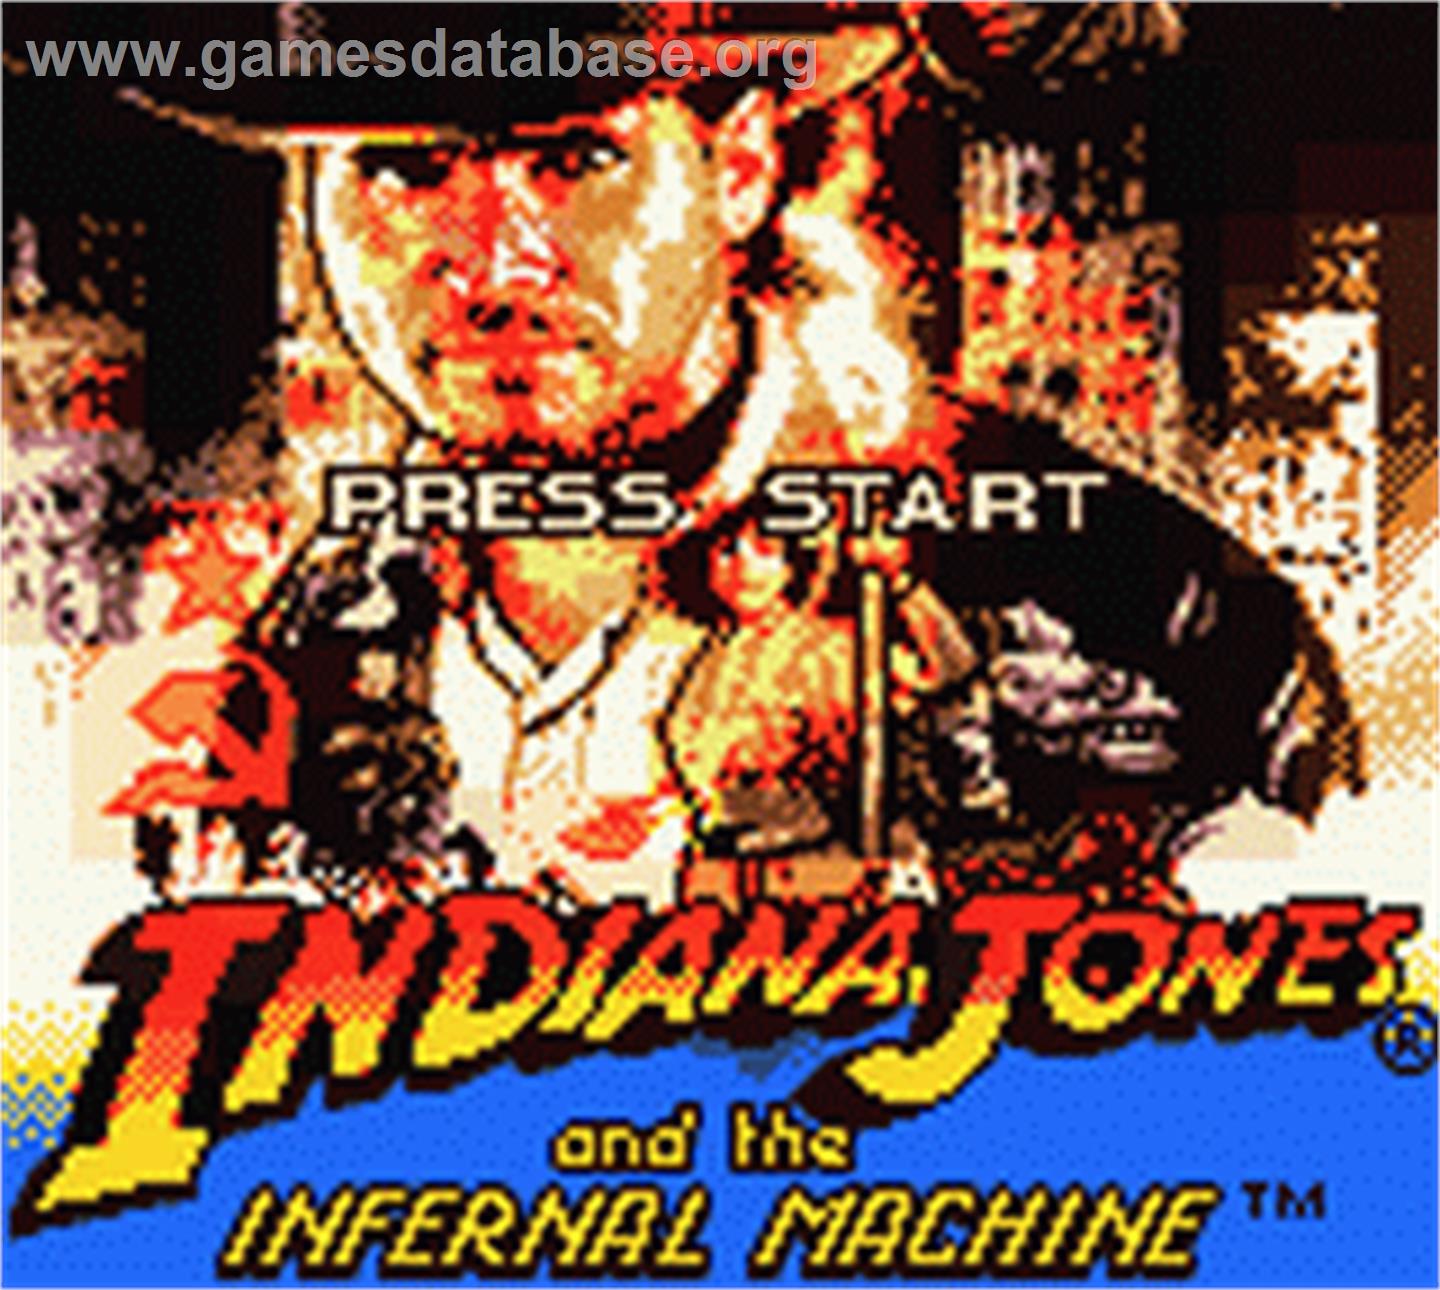 Indiana Jones and the Infernal Machine - Nintendo Game Boy Color - Artwork - Title Screen